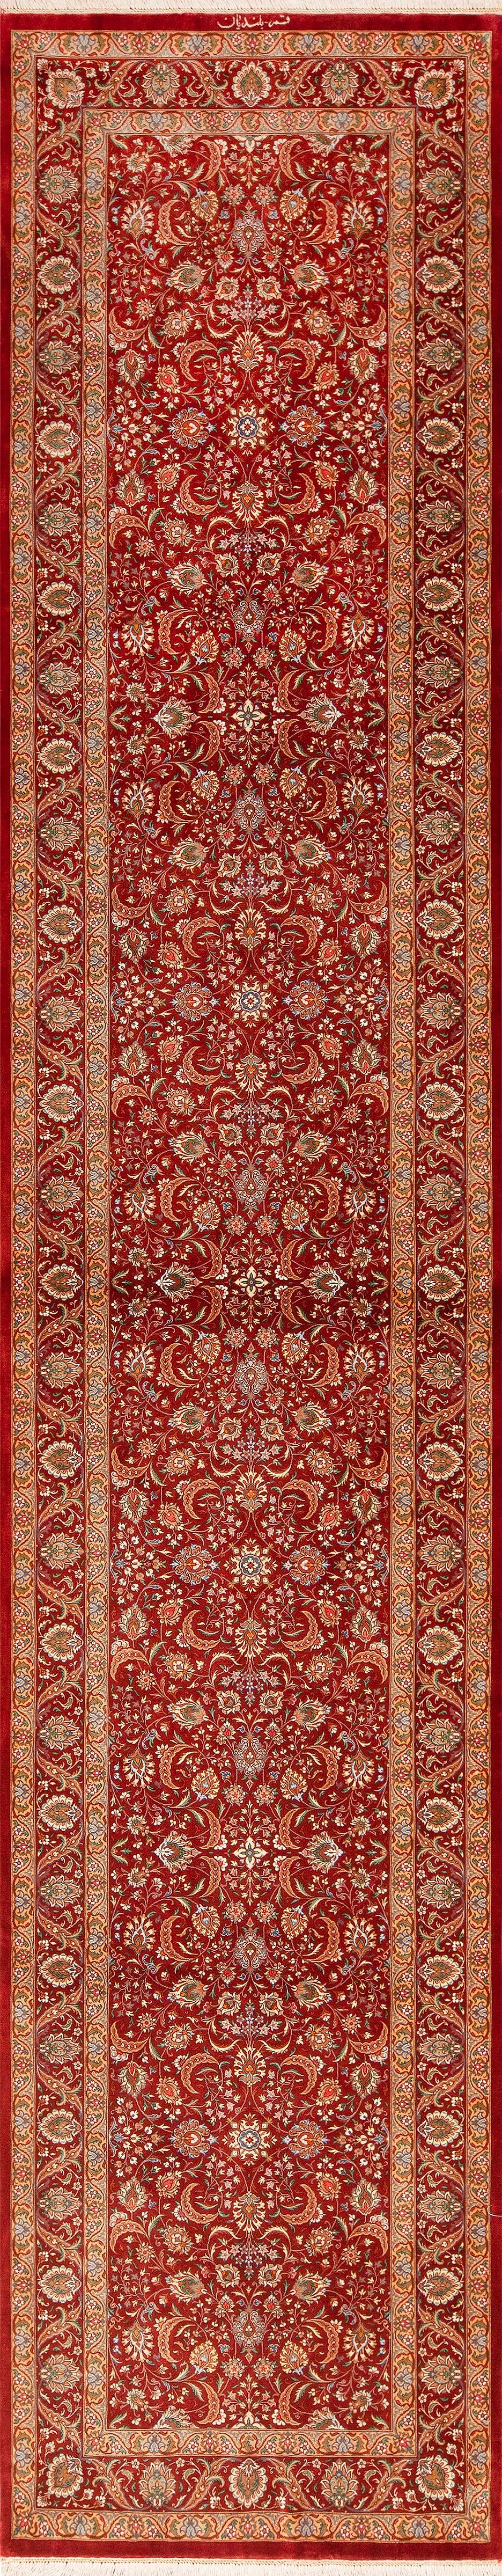 Red Fine Floral Luxurious Vintage Persian Qum Silk Runner Rug 2'9